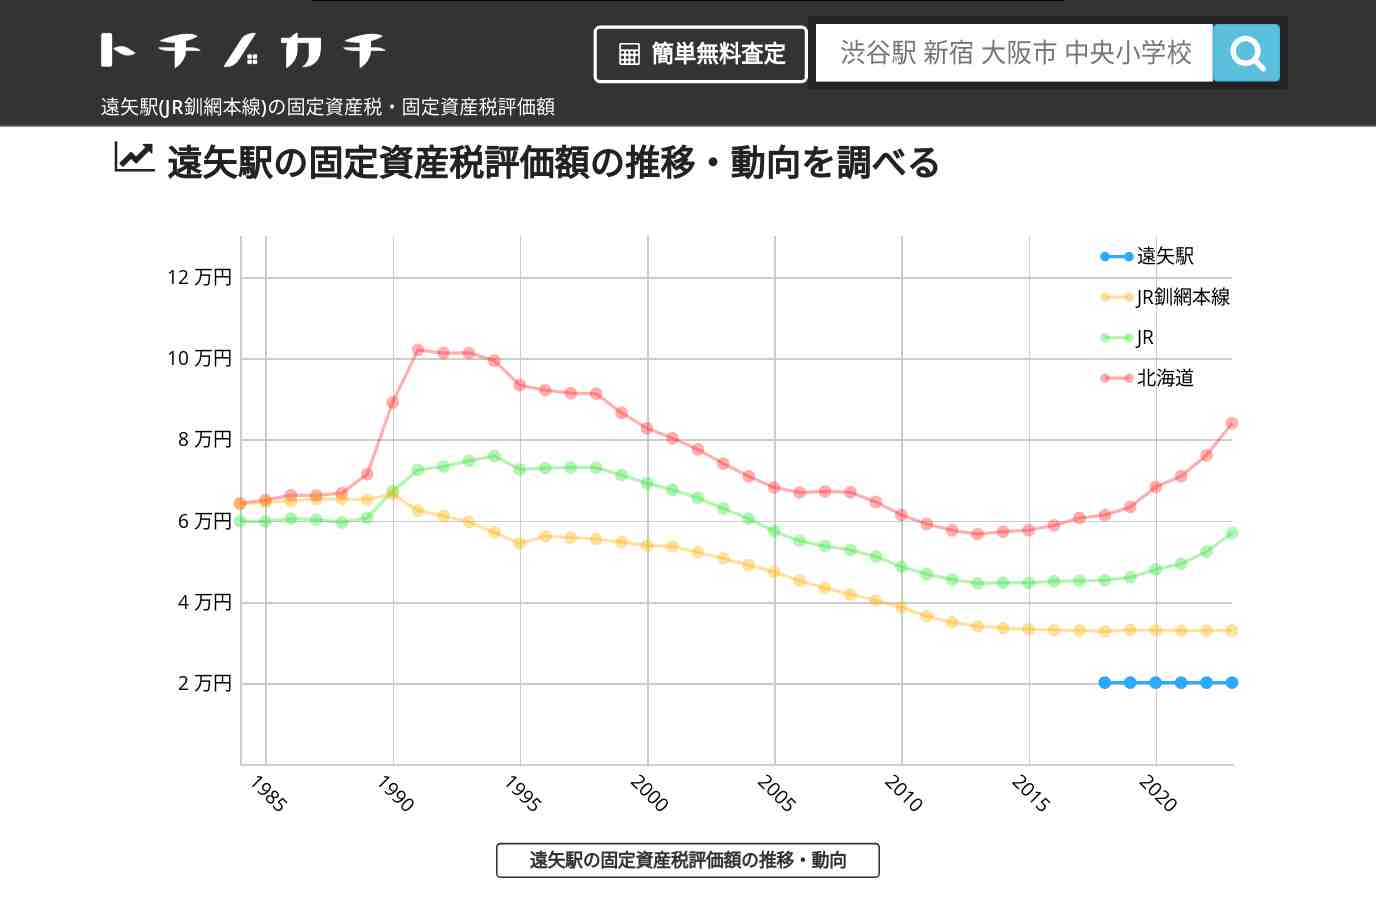 遠矢駅(JR釧網本線)の固定資産税・固定資産税評価額 | トチノカチ